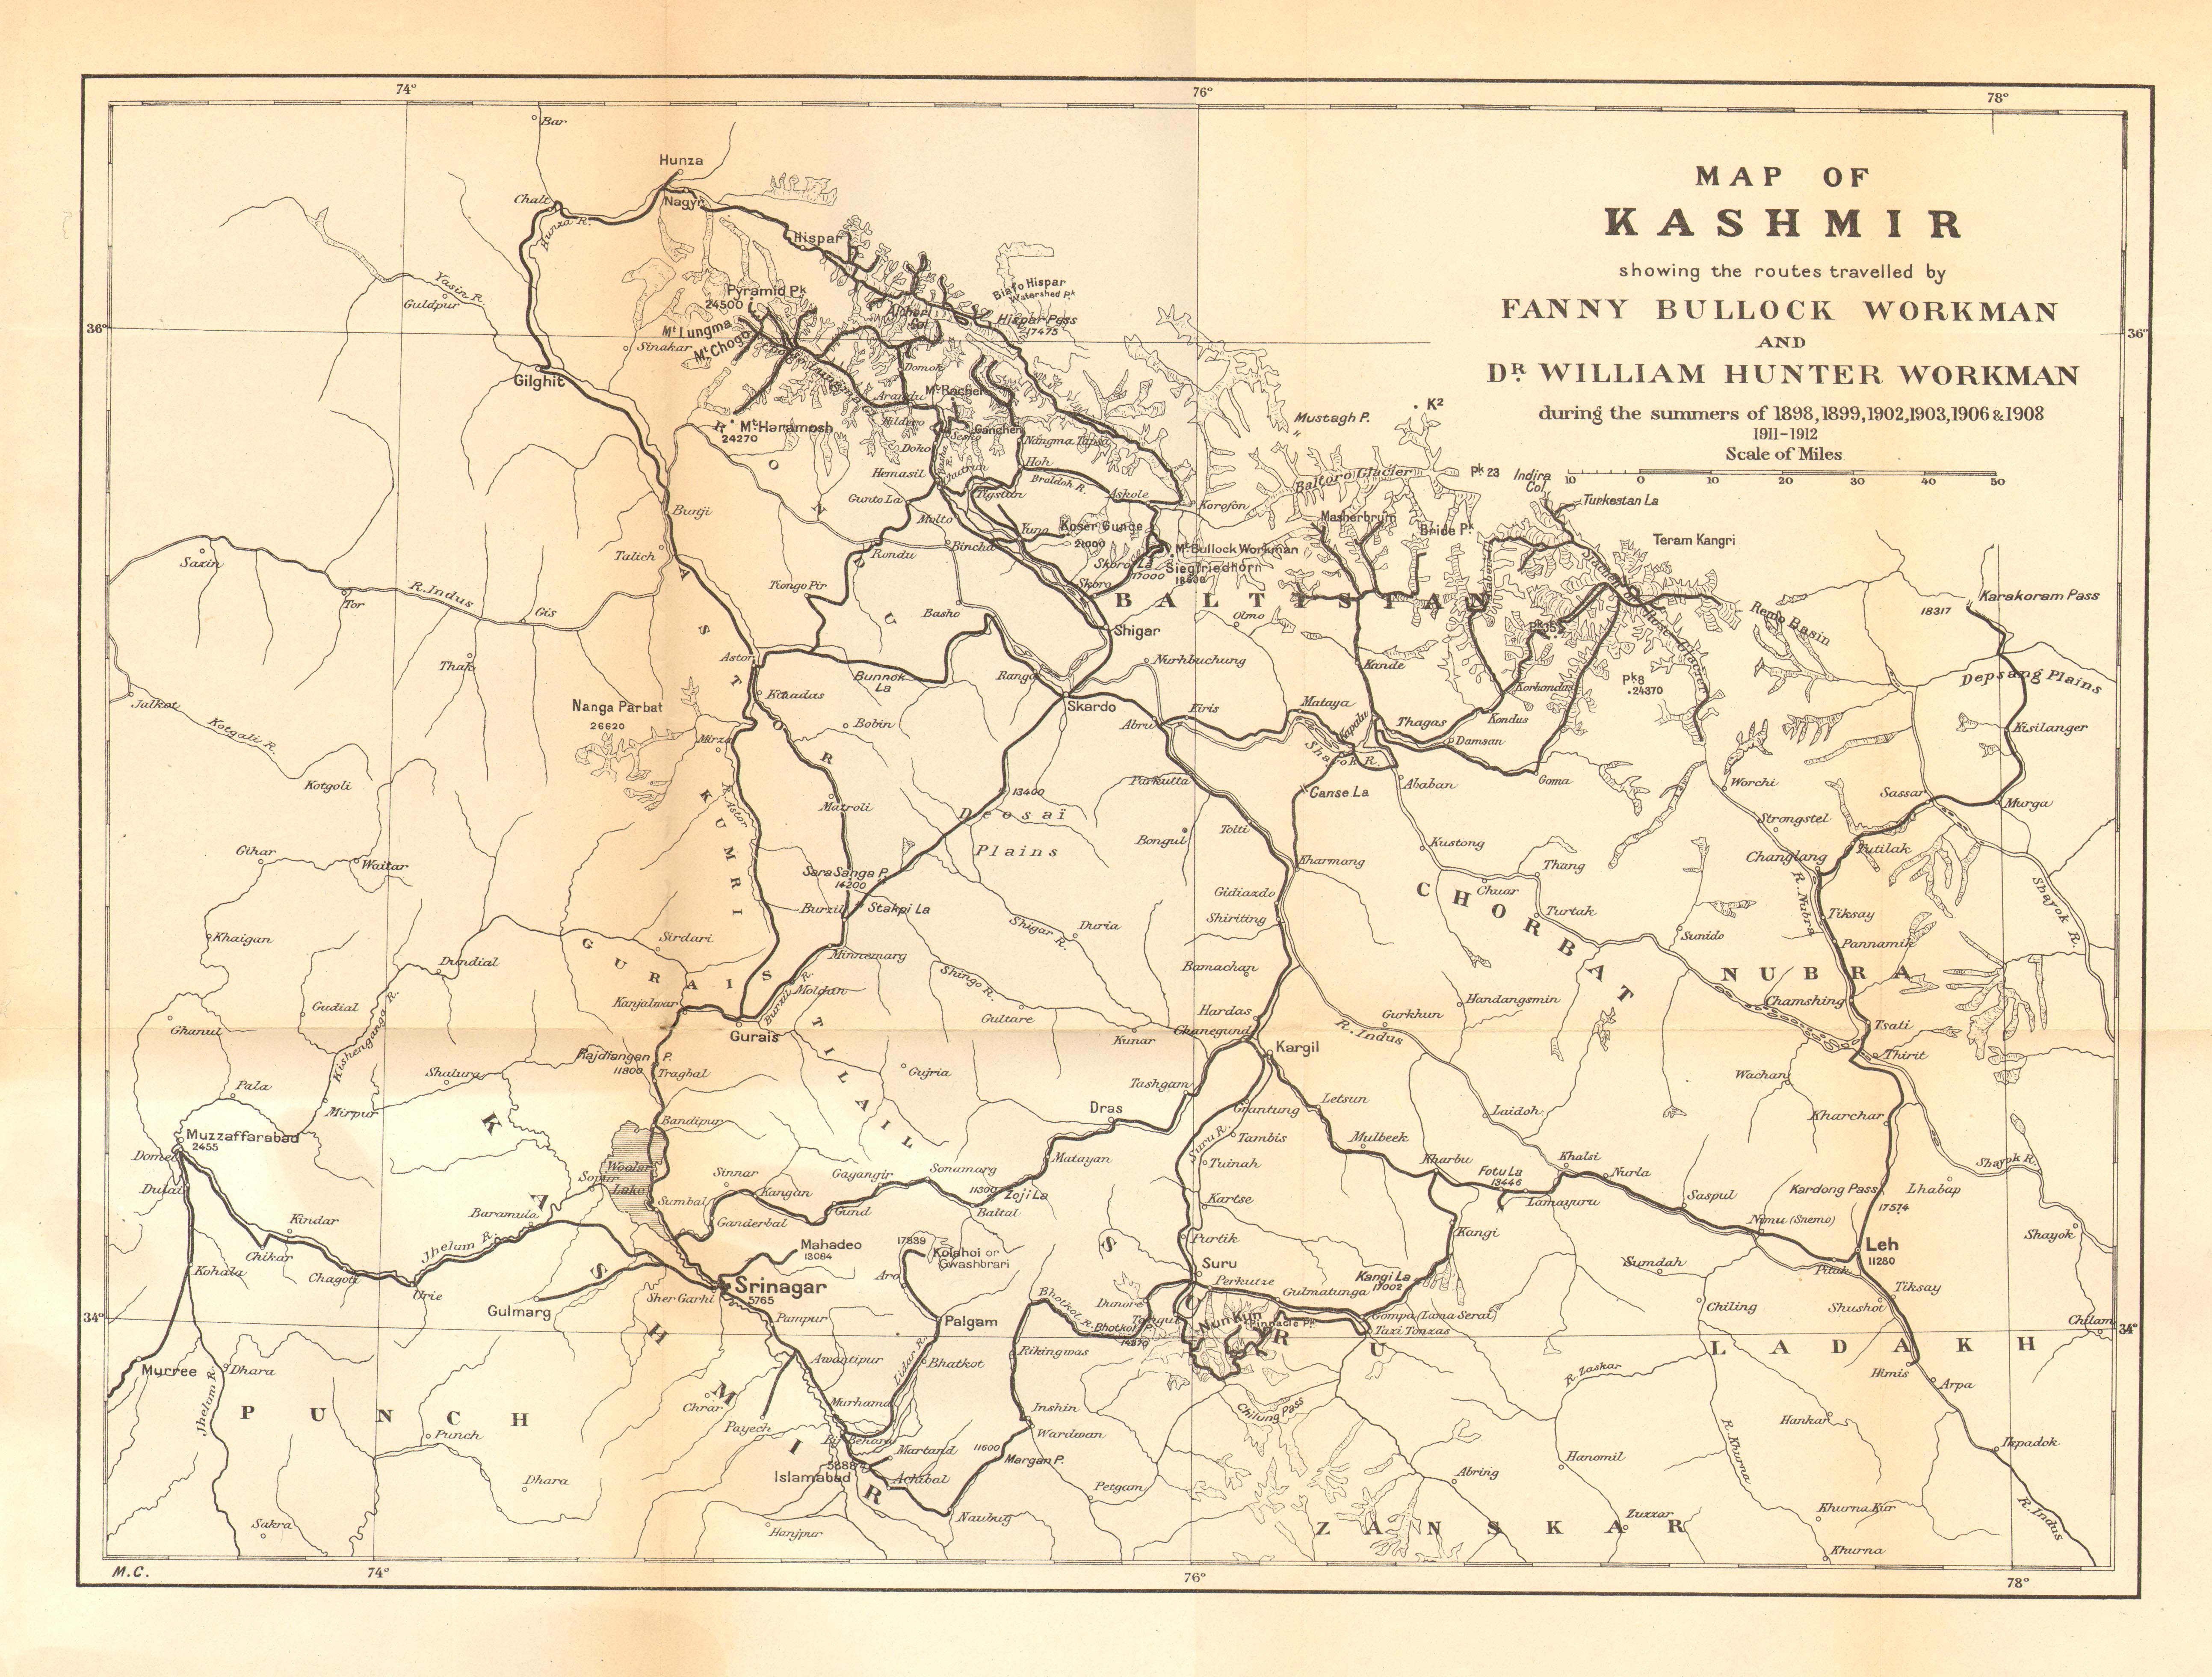 Old map of jammu kashmir